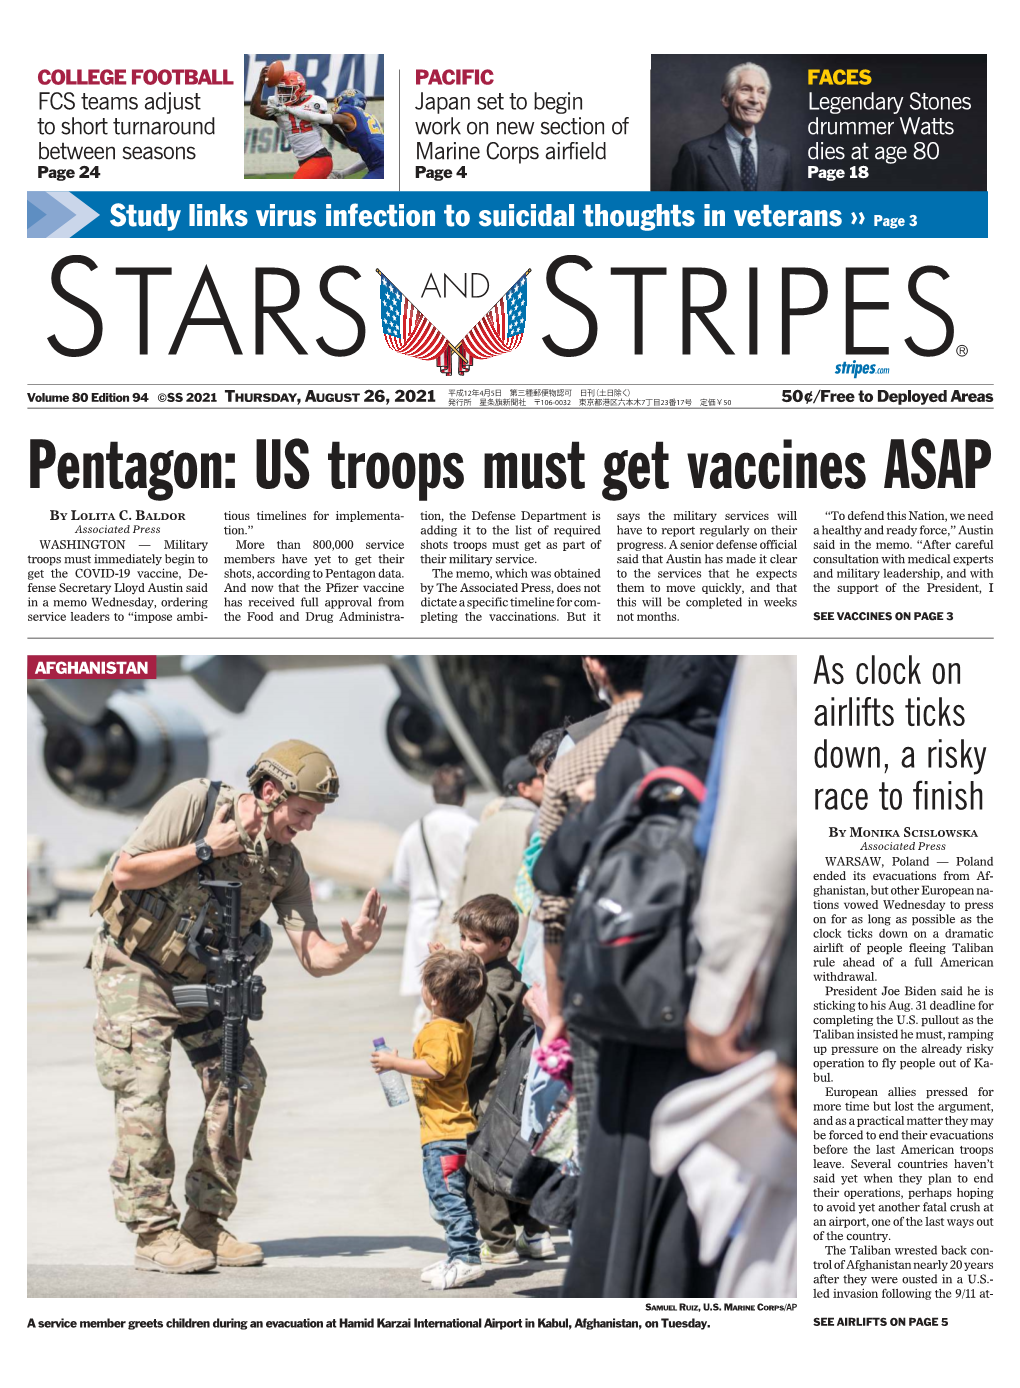 US Troops Must Get Vaccines ASAP by LOLITA C